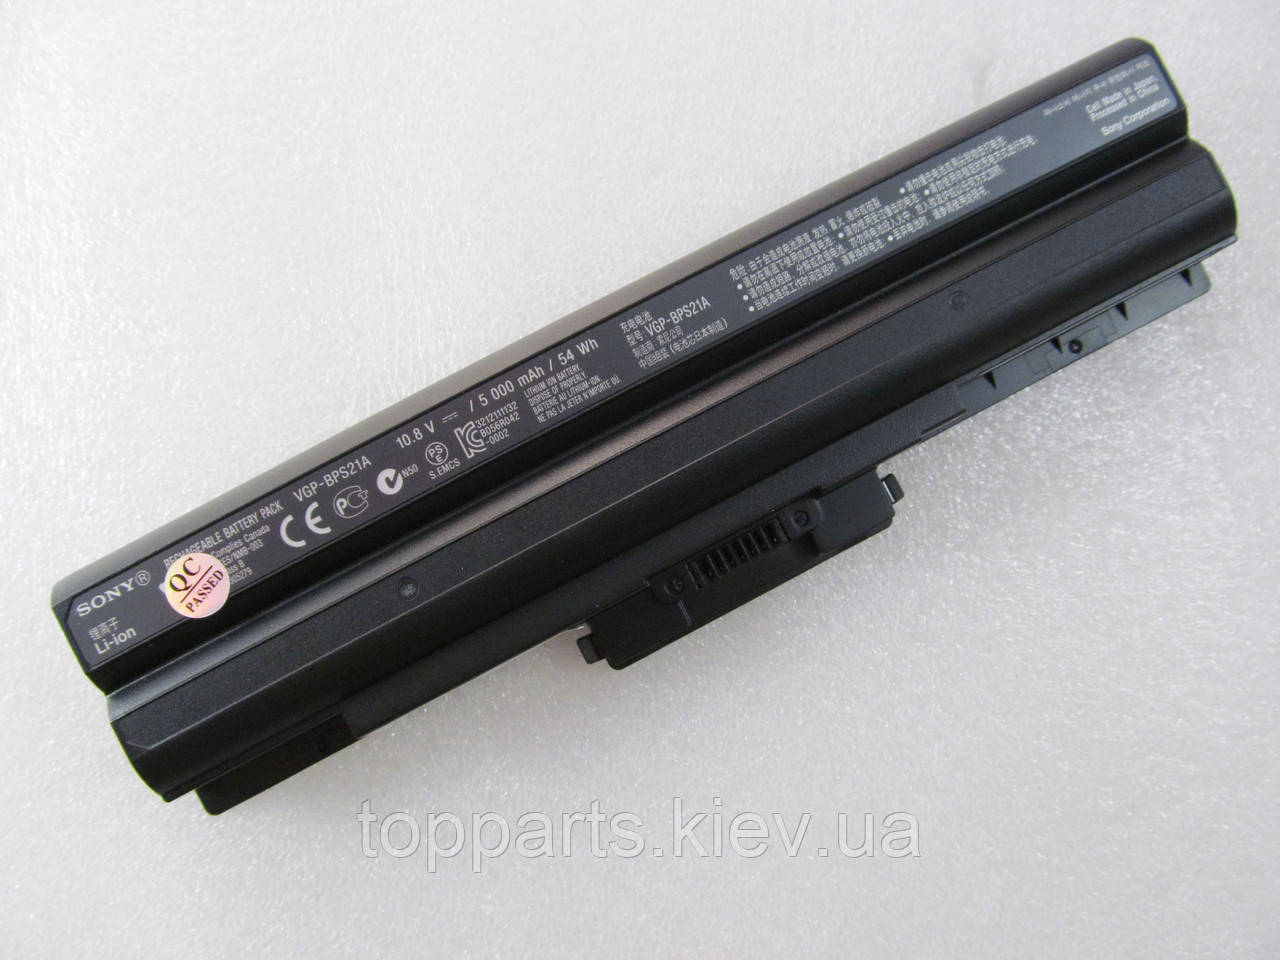 Батарея для ноутбука Sony VGP-BPS21 Vaio VGN-FW, 5000mAh (54Wh), 6cell, 11.1V, Li-ion, чорна, ОРИГІНАЛЬНА